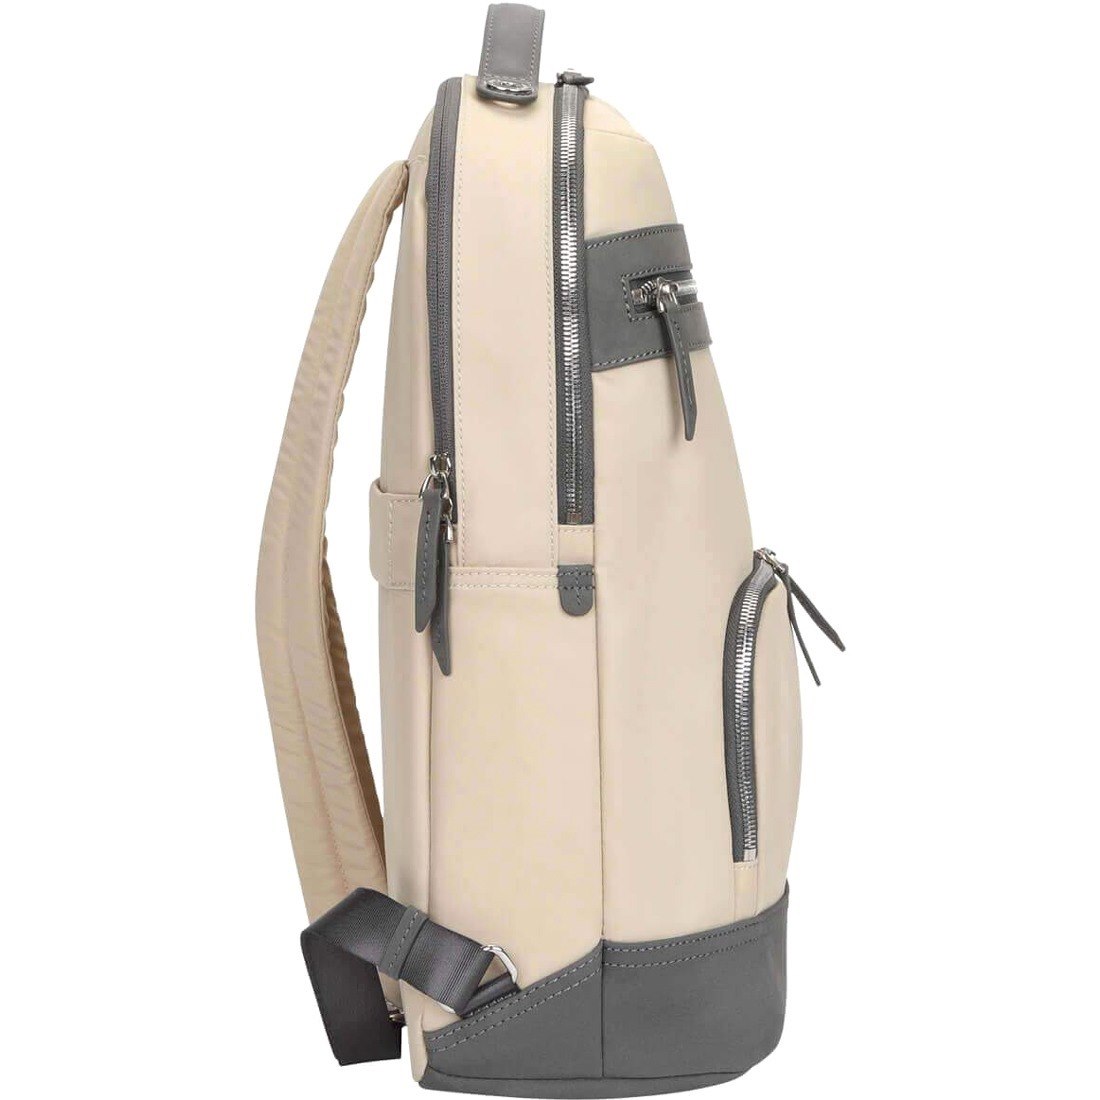 Targus Newport TBB59906GL Carrying Case (Backpack) for 15" Notebook - Tan